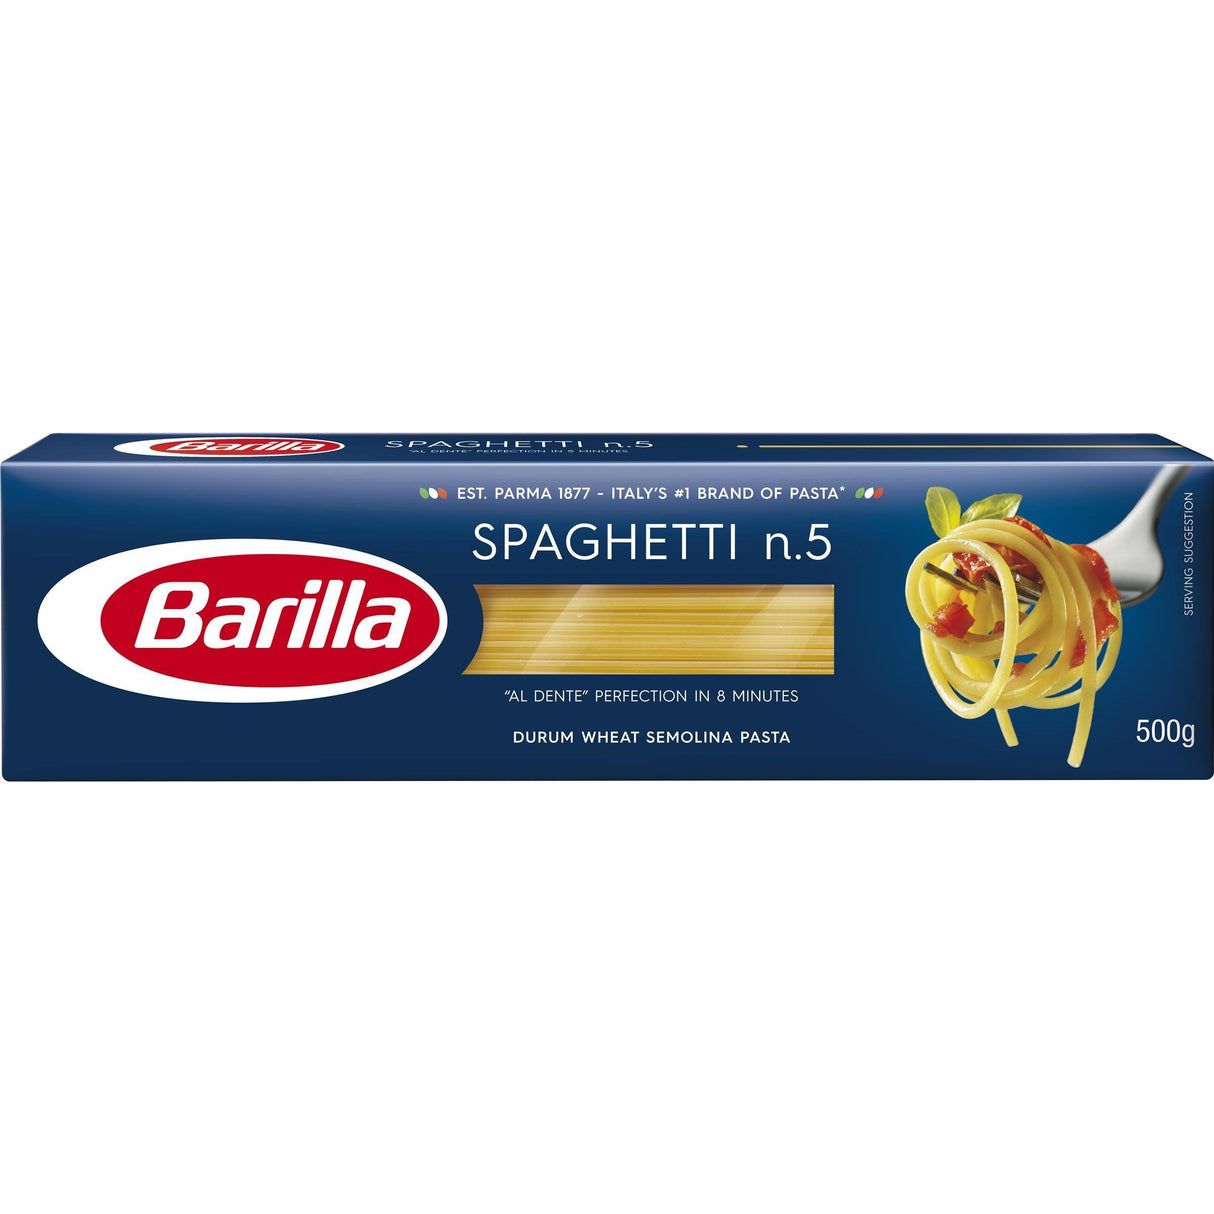 Barilla Spaghetti Pasta N.5 500g